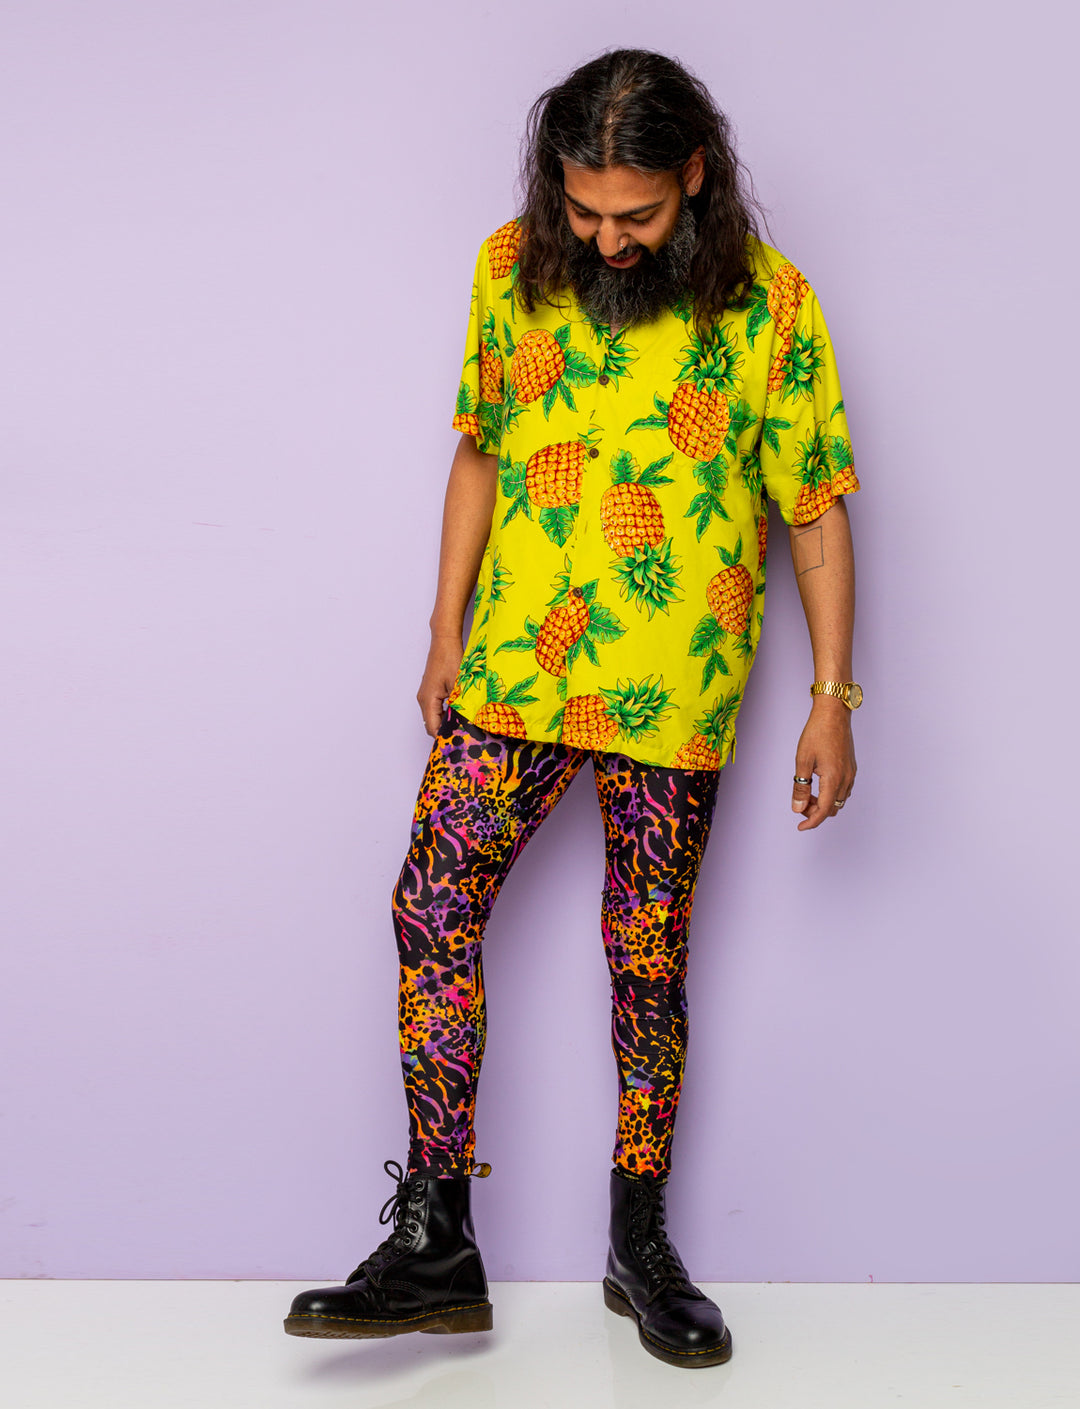 Man modelling a pair of purple leopard print Mens leggings.